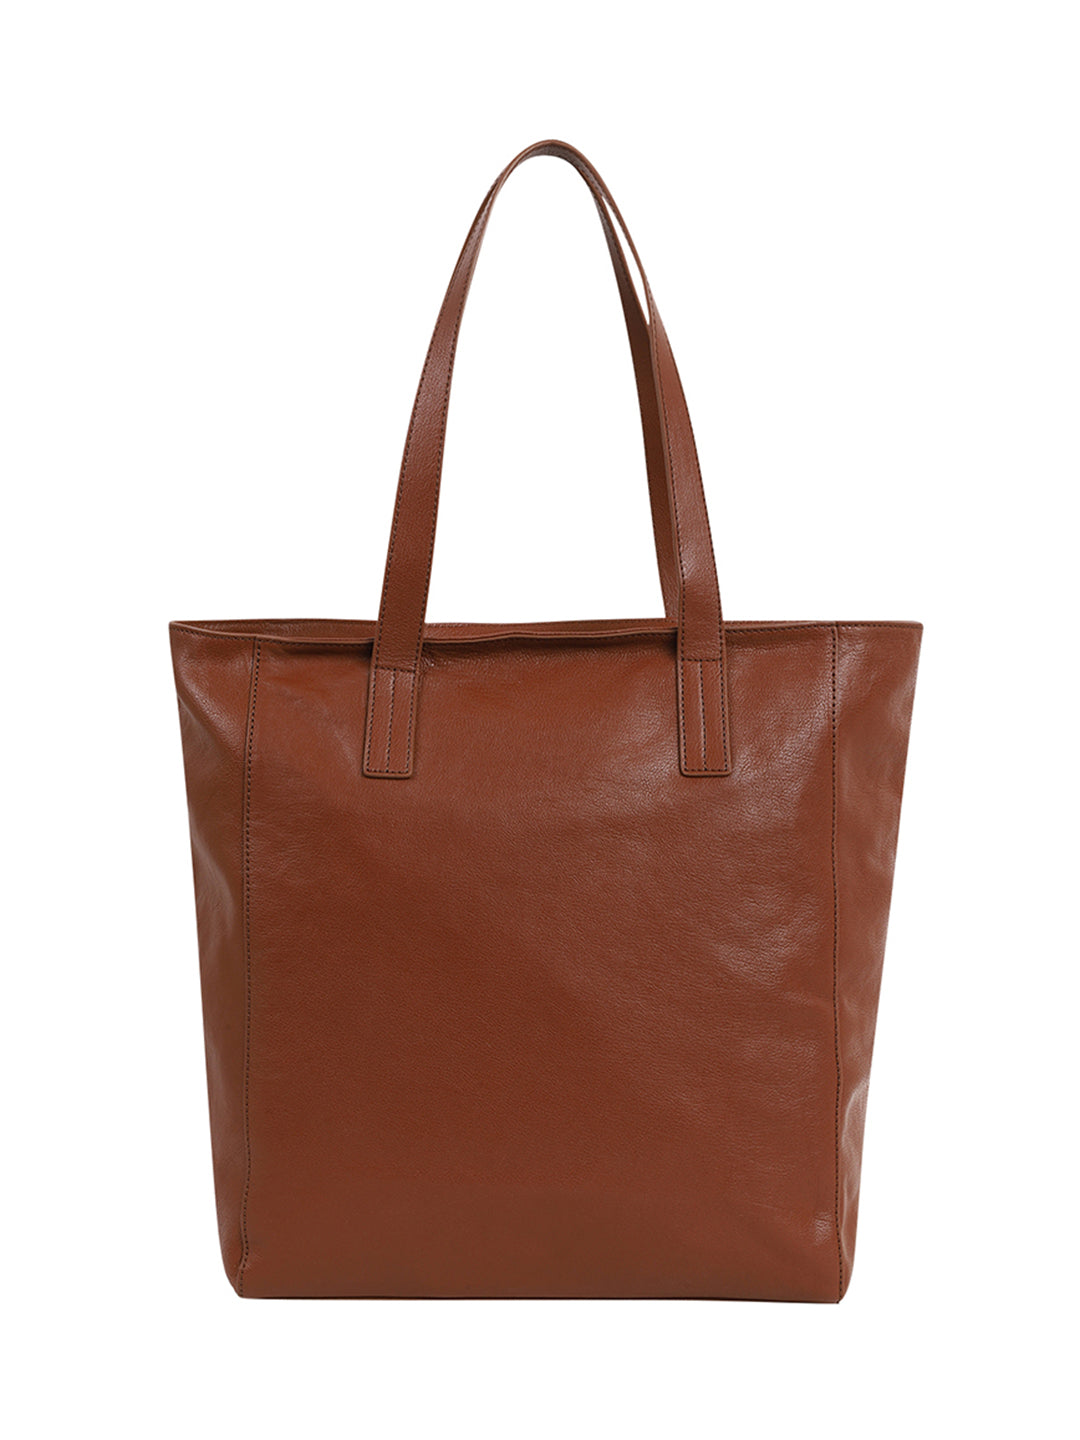 Veneto Cognac Leather Tote Bag